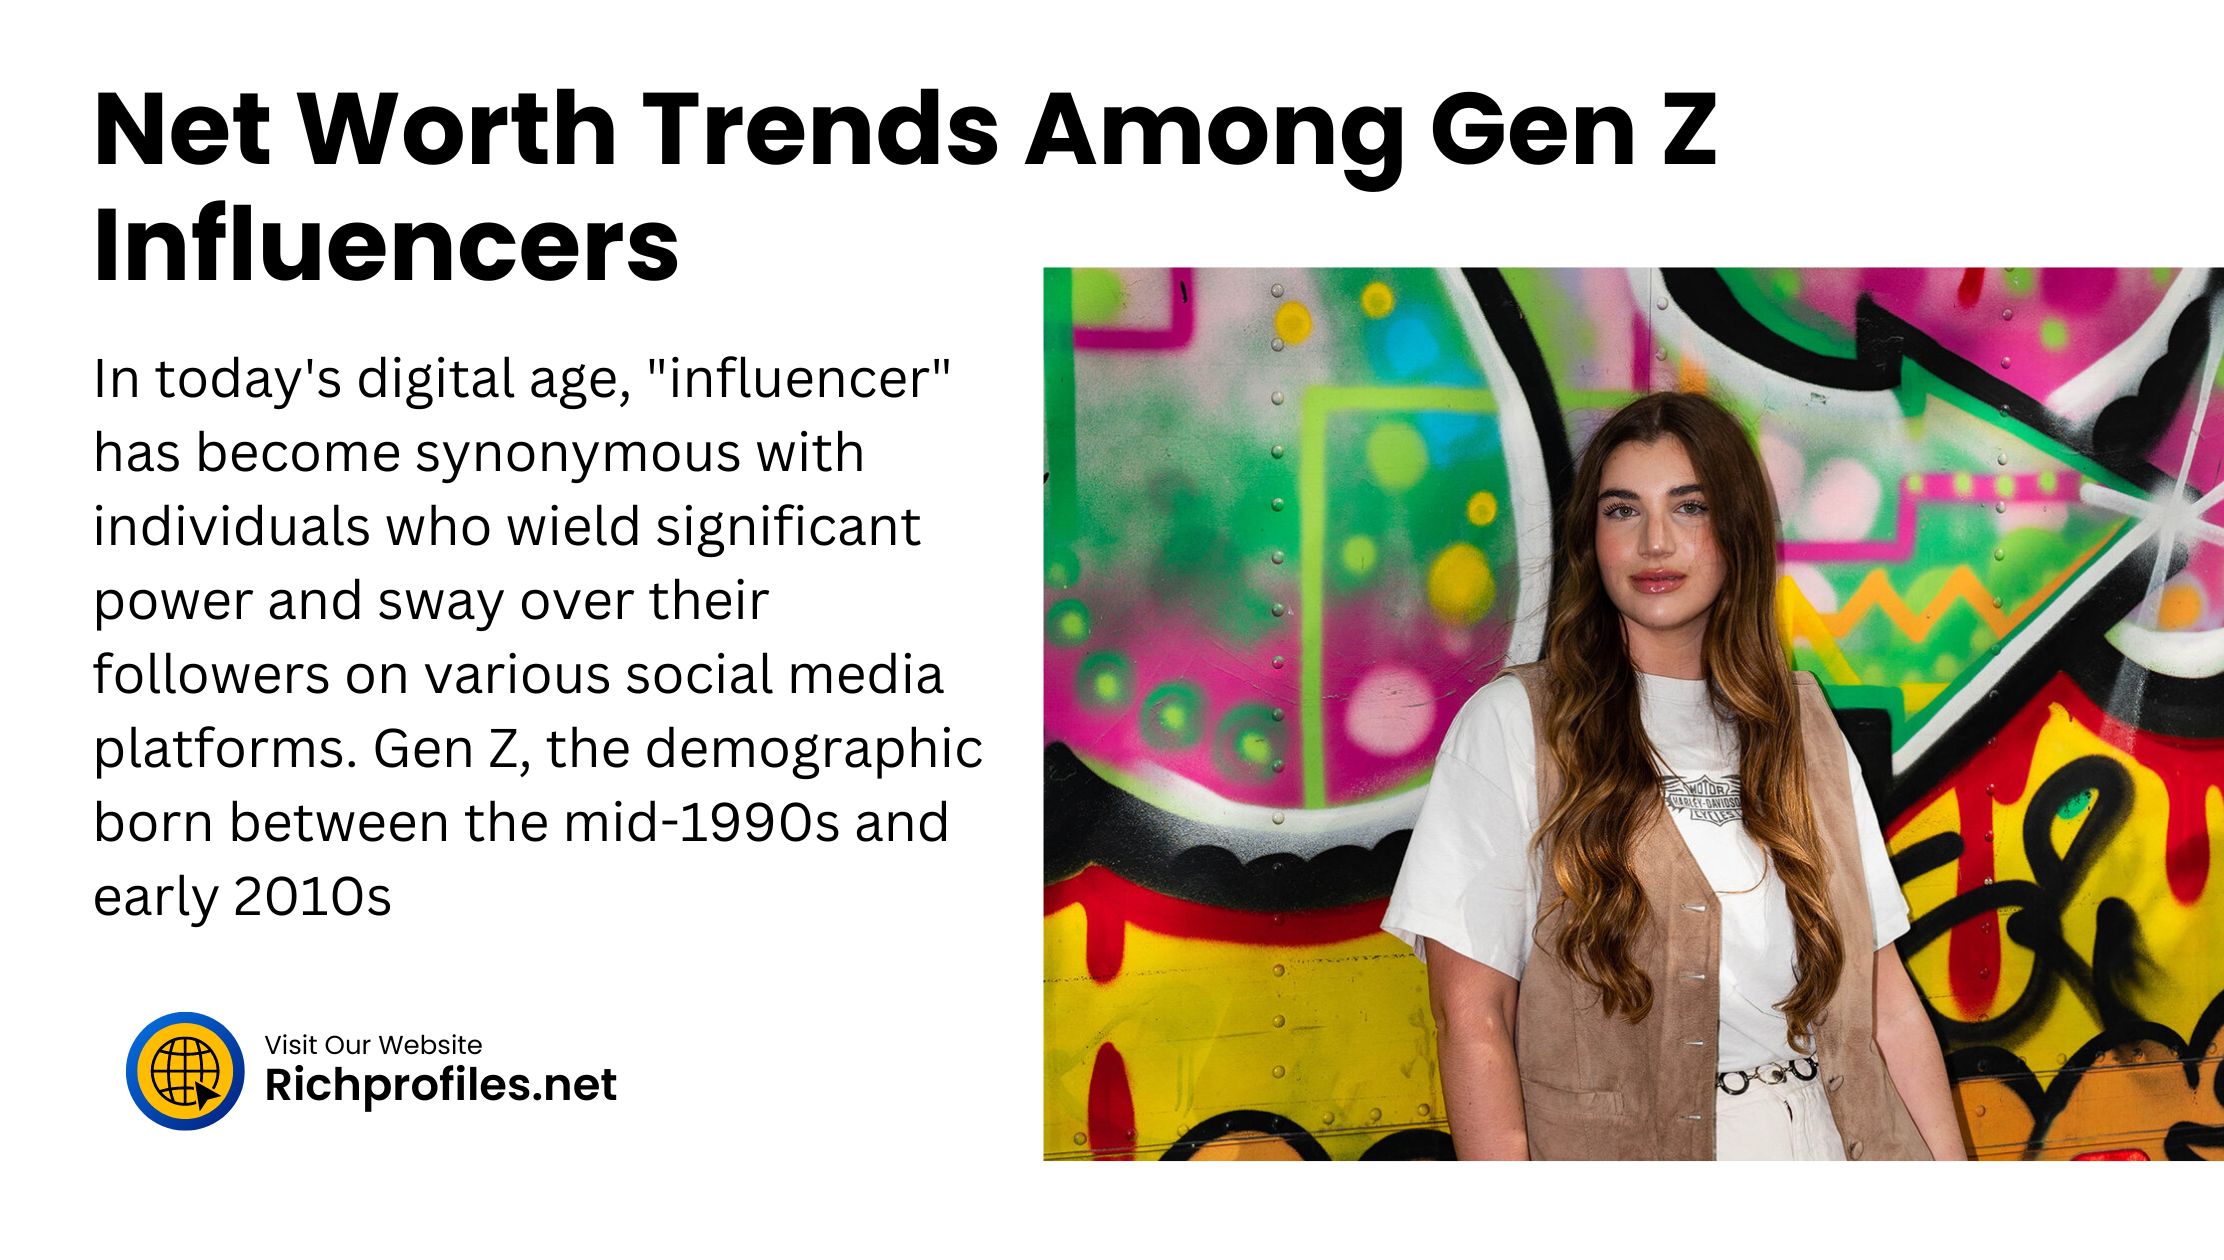 Net Worth Trends Among Gen Z Influencers